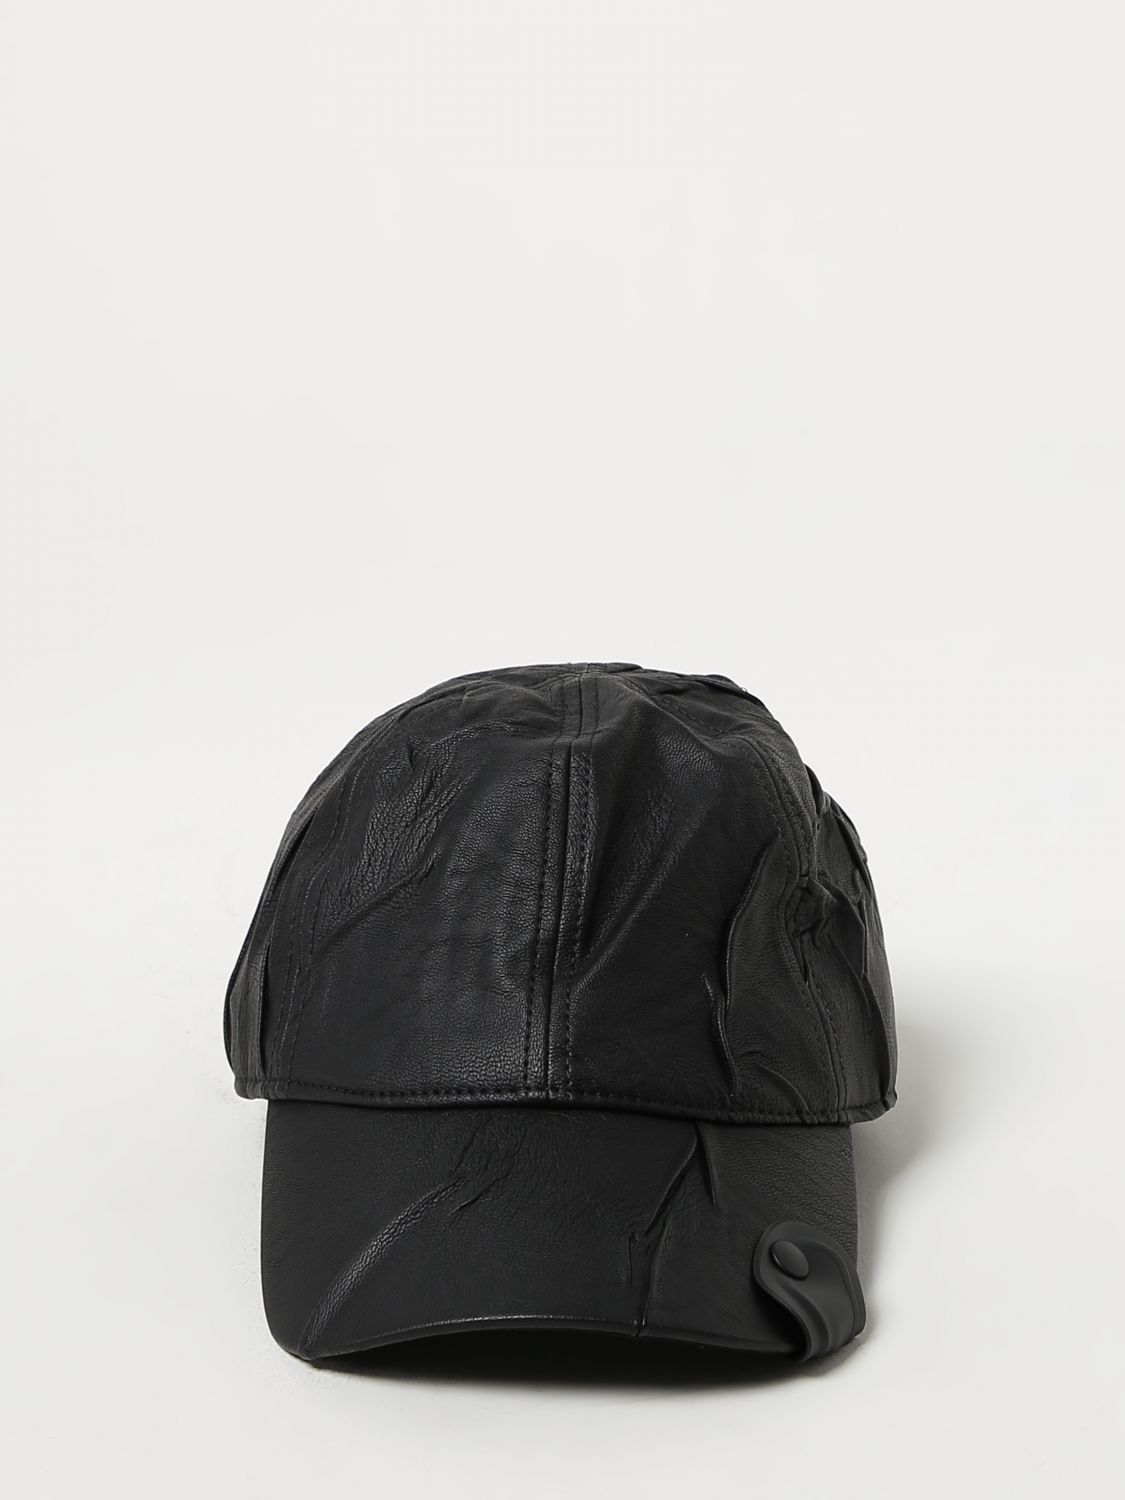 Innerraum Helmet Baseball Cap, Hats Black One Size